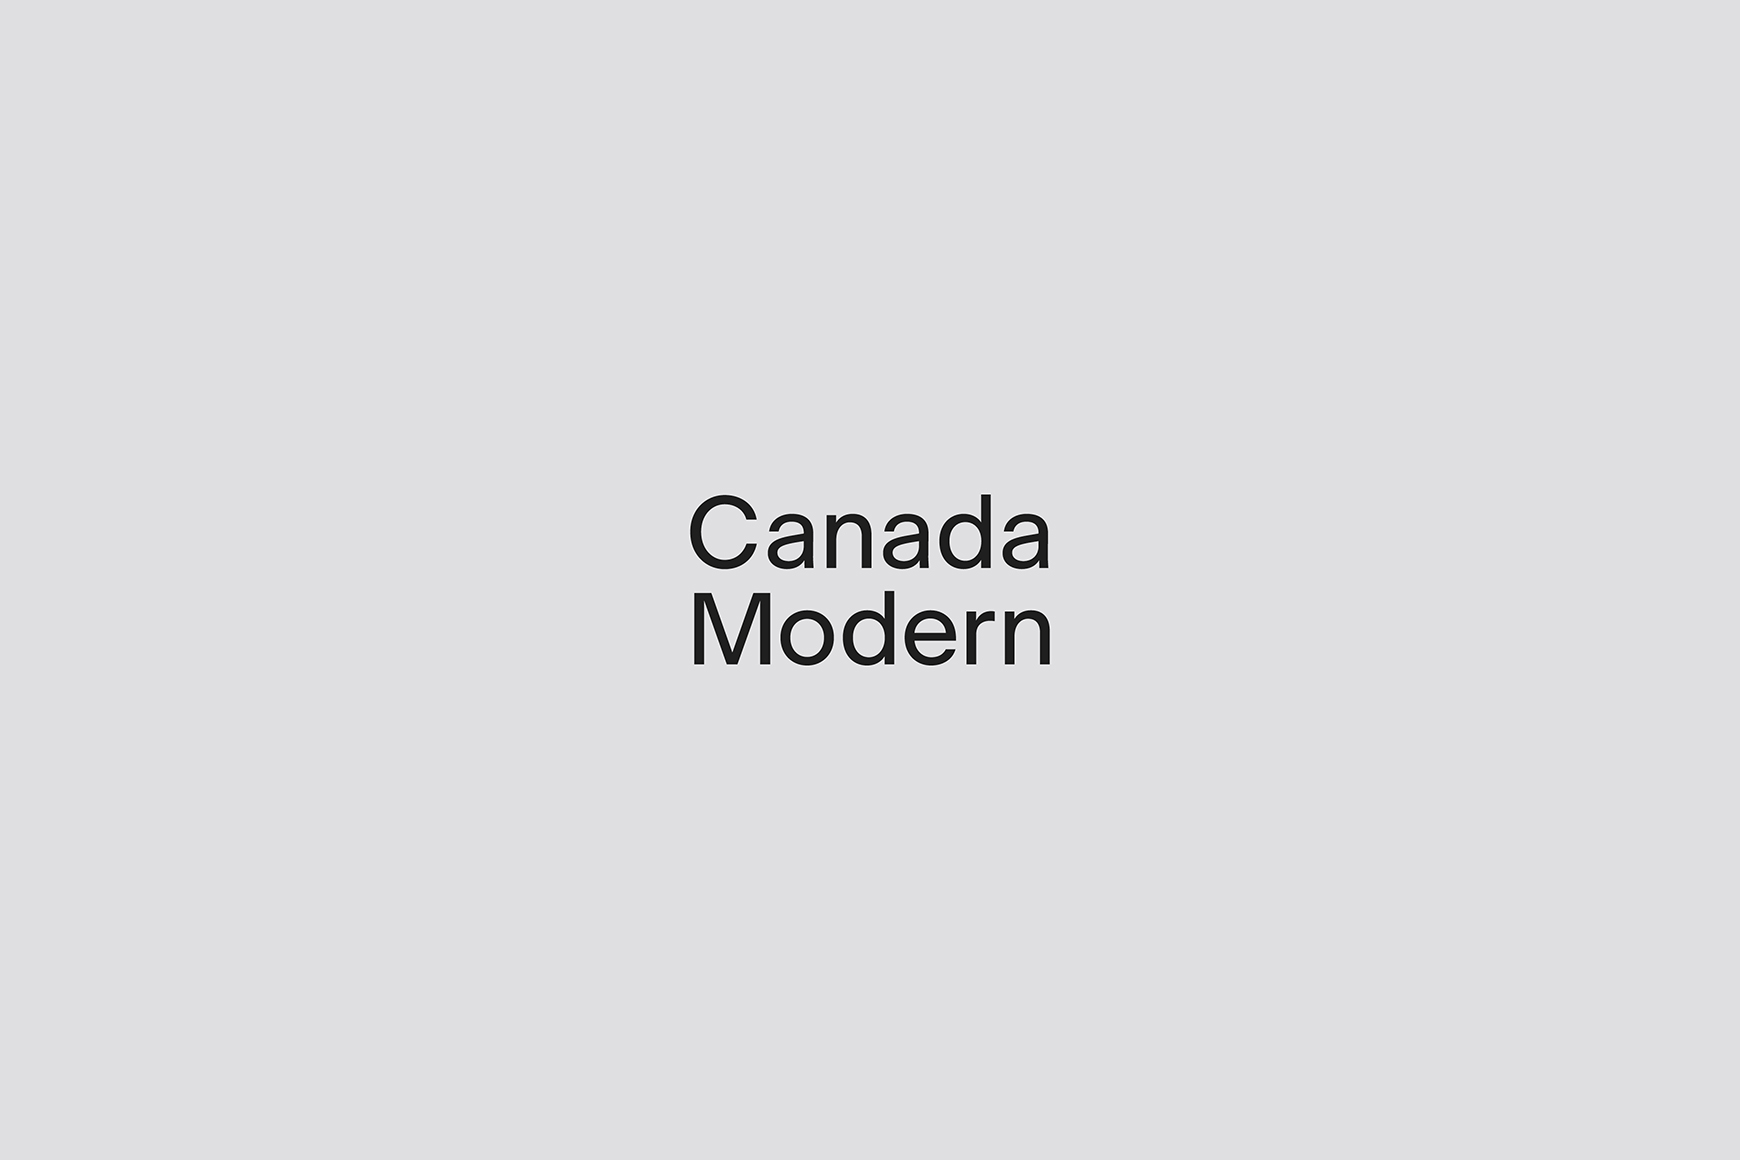 Canada Modern - Identity and website